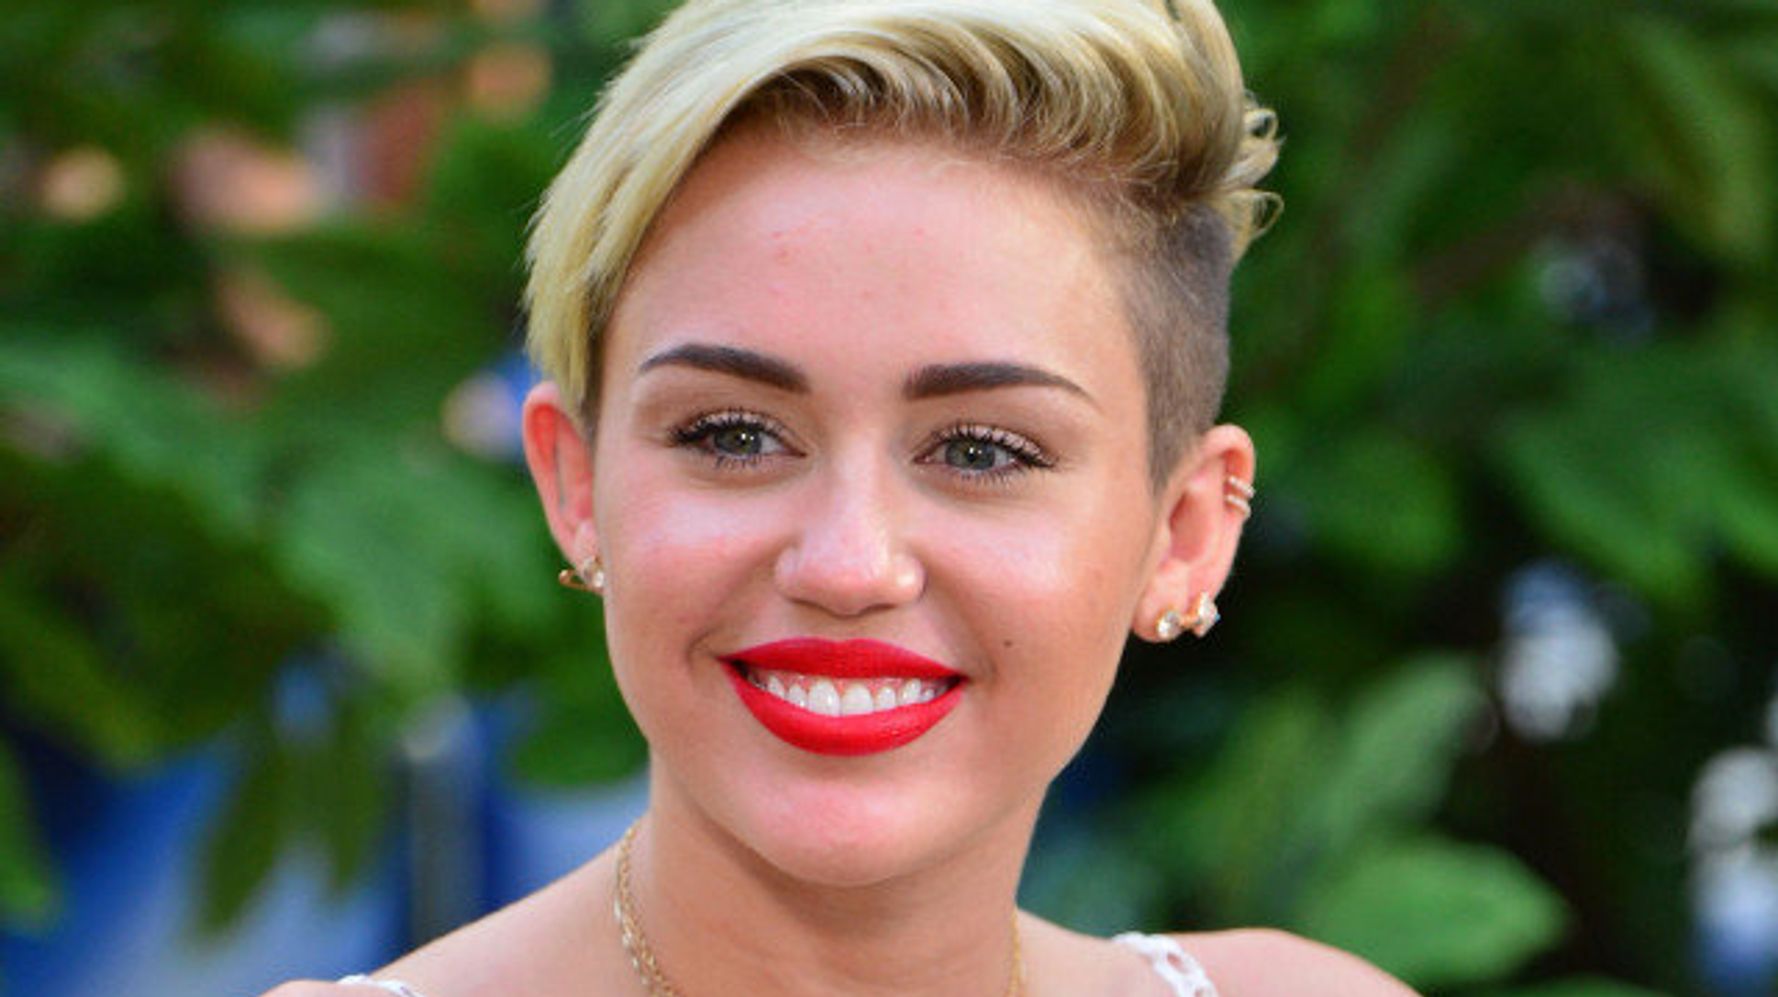 Miley Cyrus' Haircut 'Changed Her Life' | HuffPost Videos